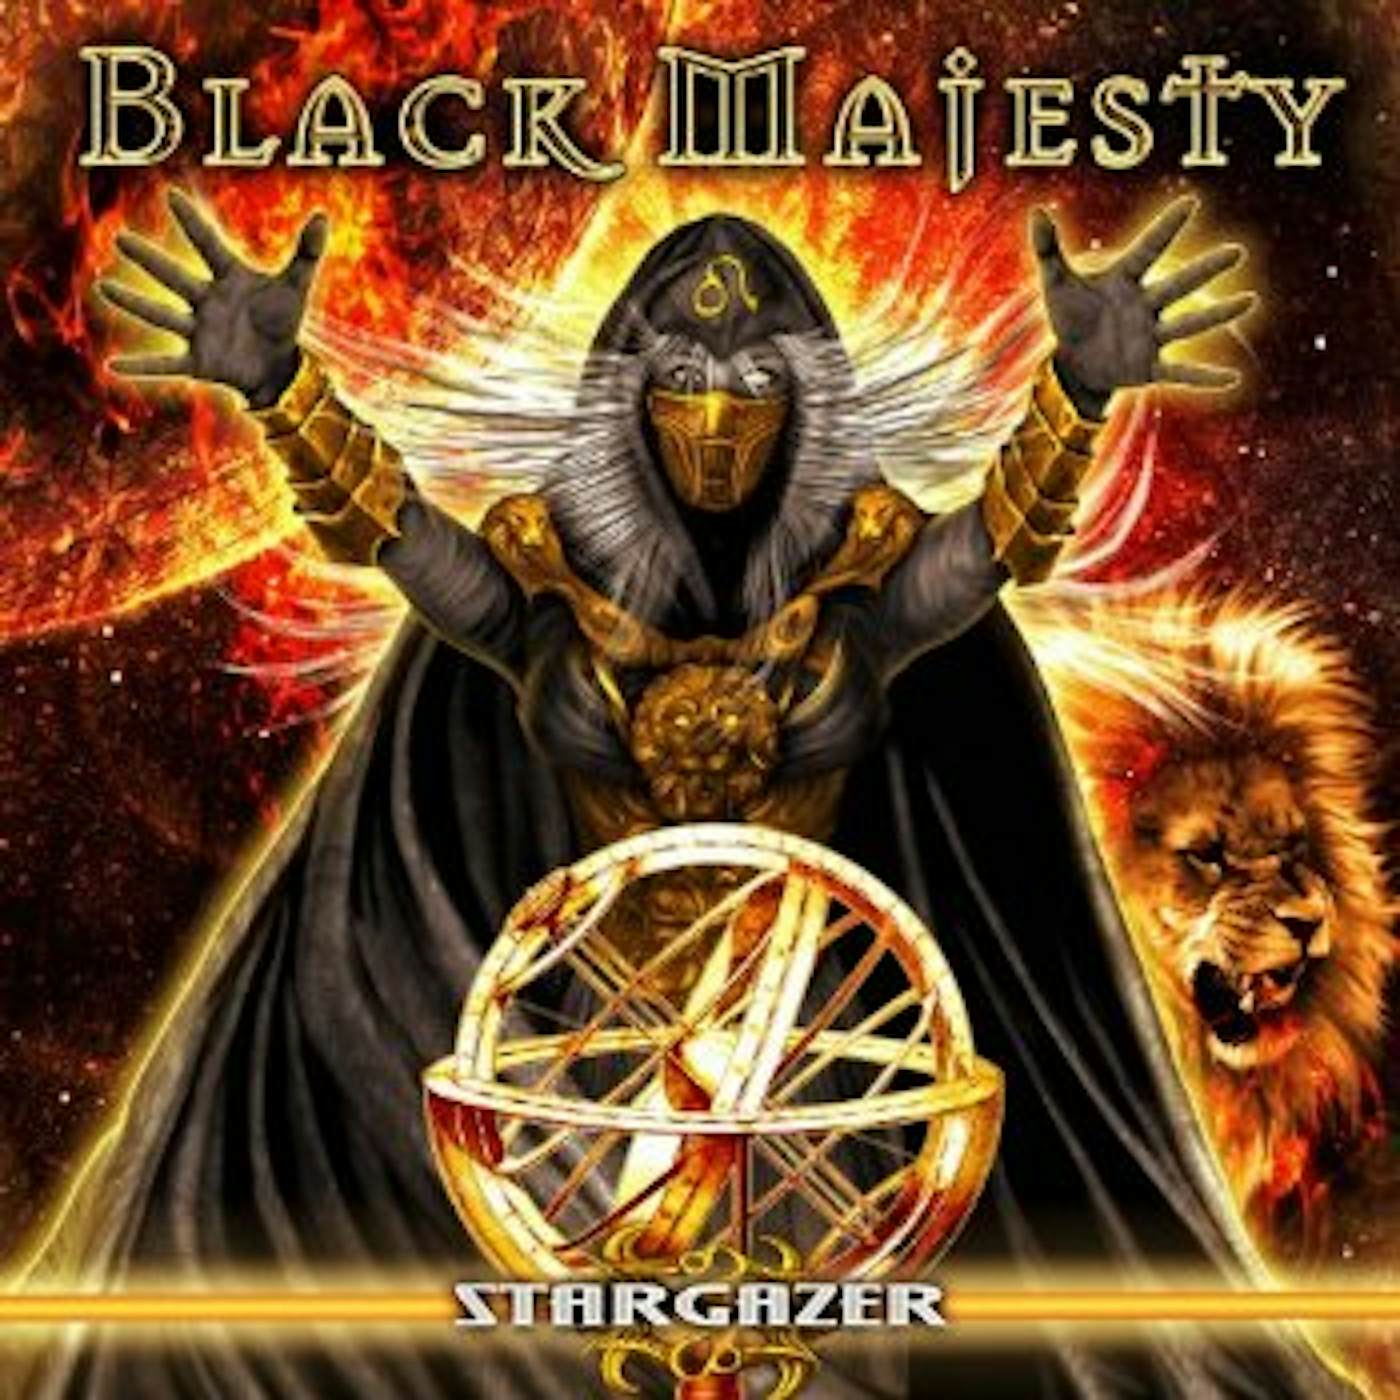 Black Majesty STARGAZER CD